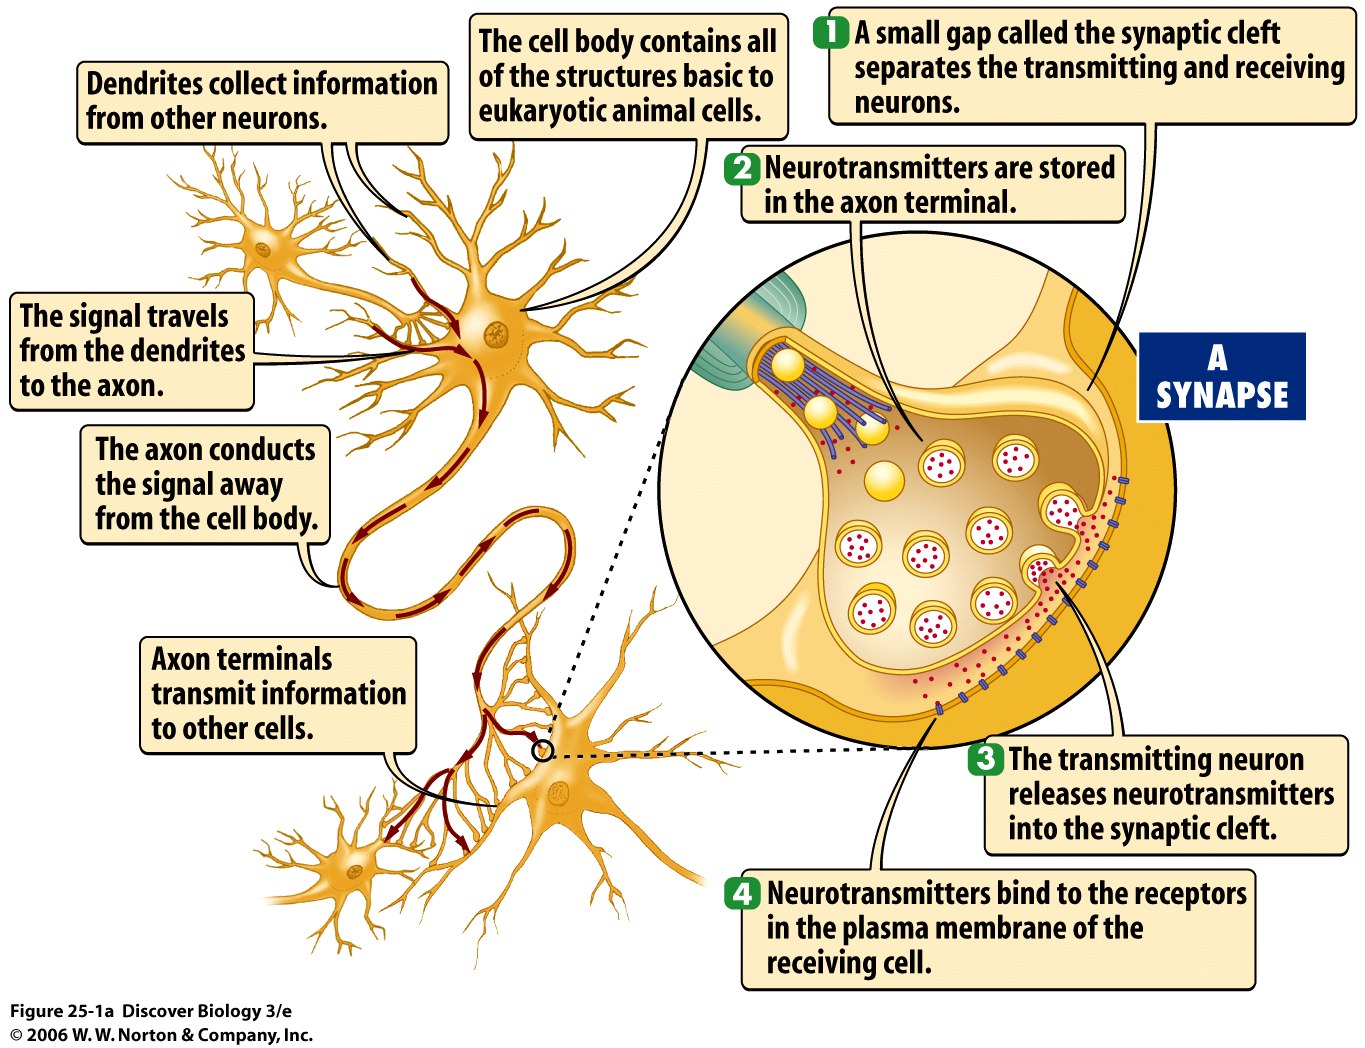 Different neurotransmitters